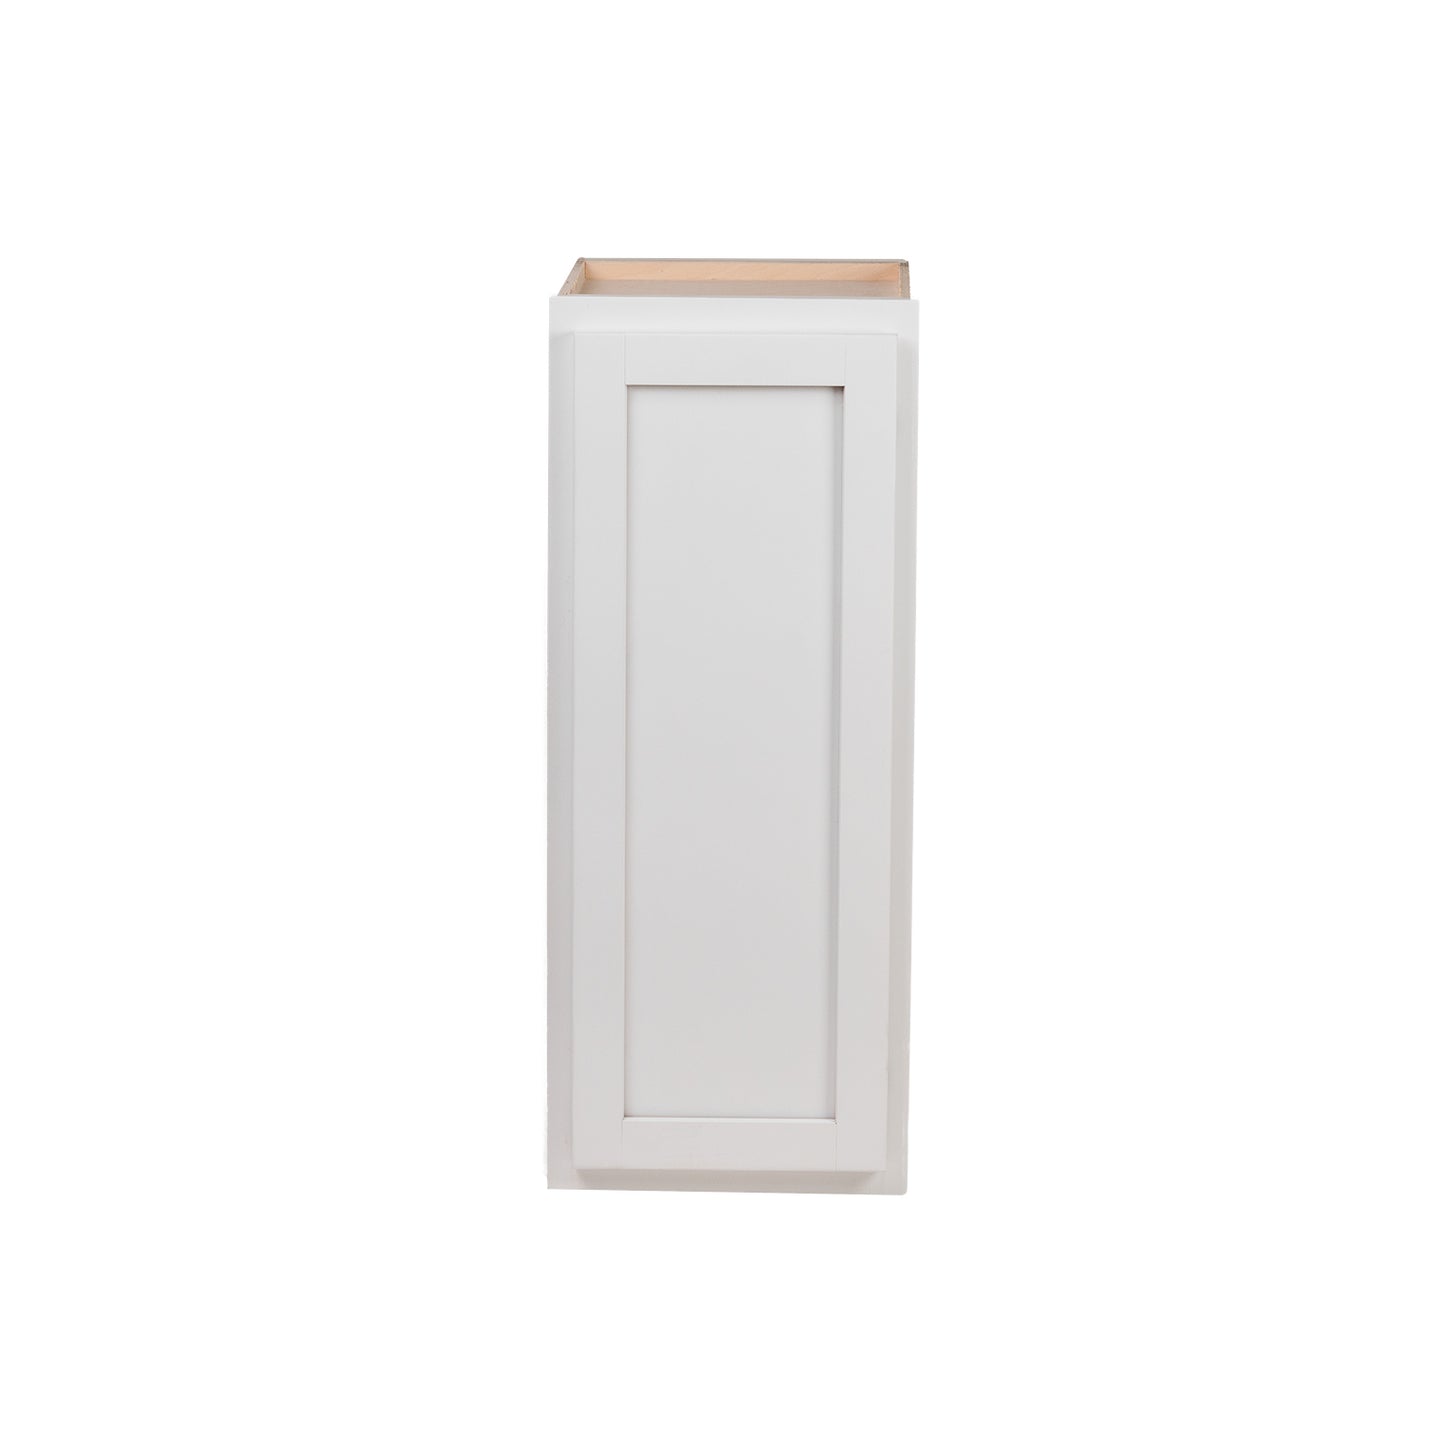 Quicklock RTA (Ready-to-Assemble) Pure White 21"Wx42"Hx12"D Wall Cabinet